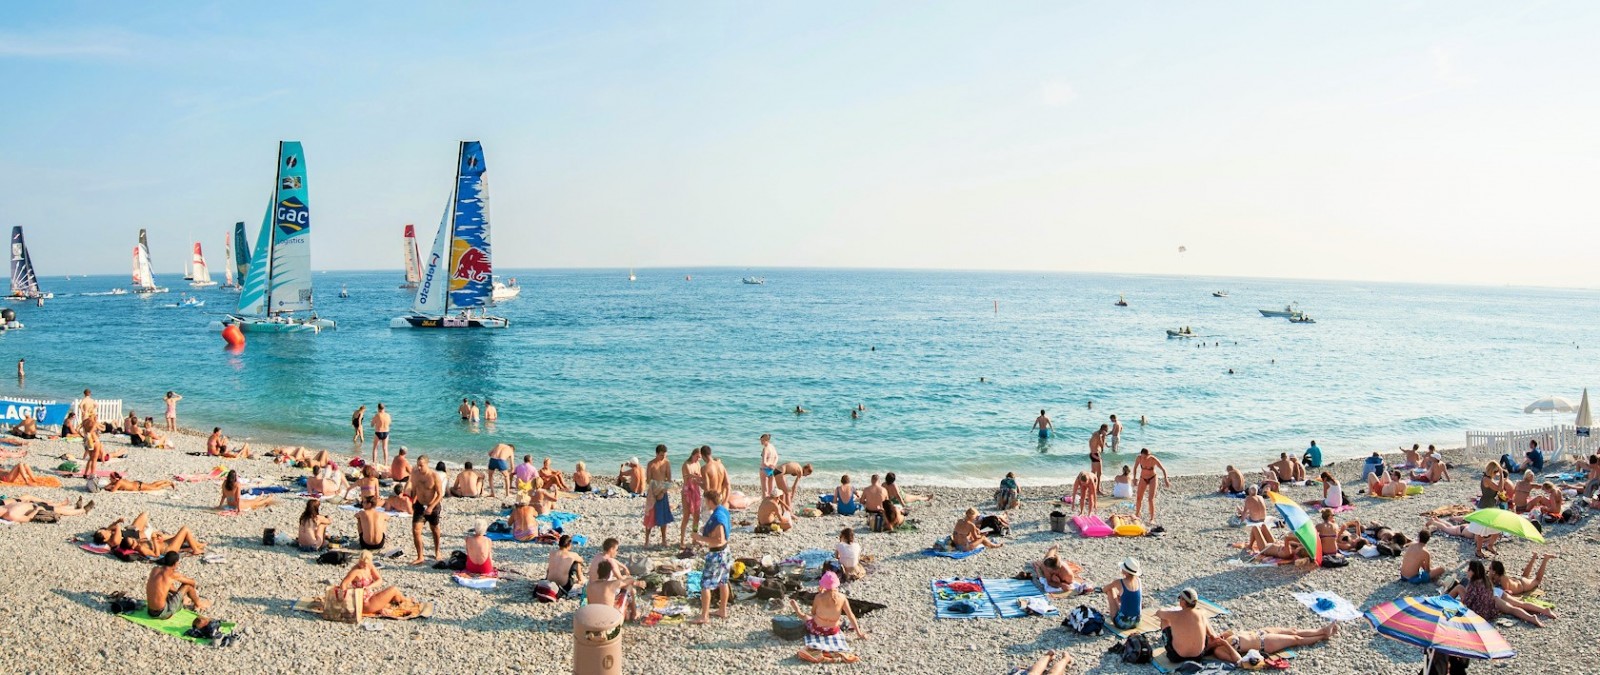 Cannes beaches